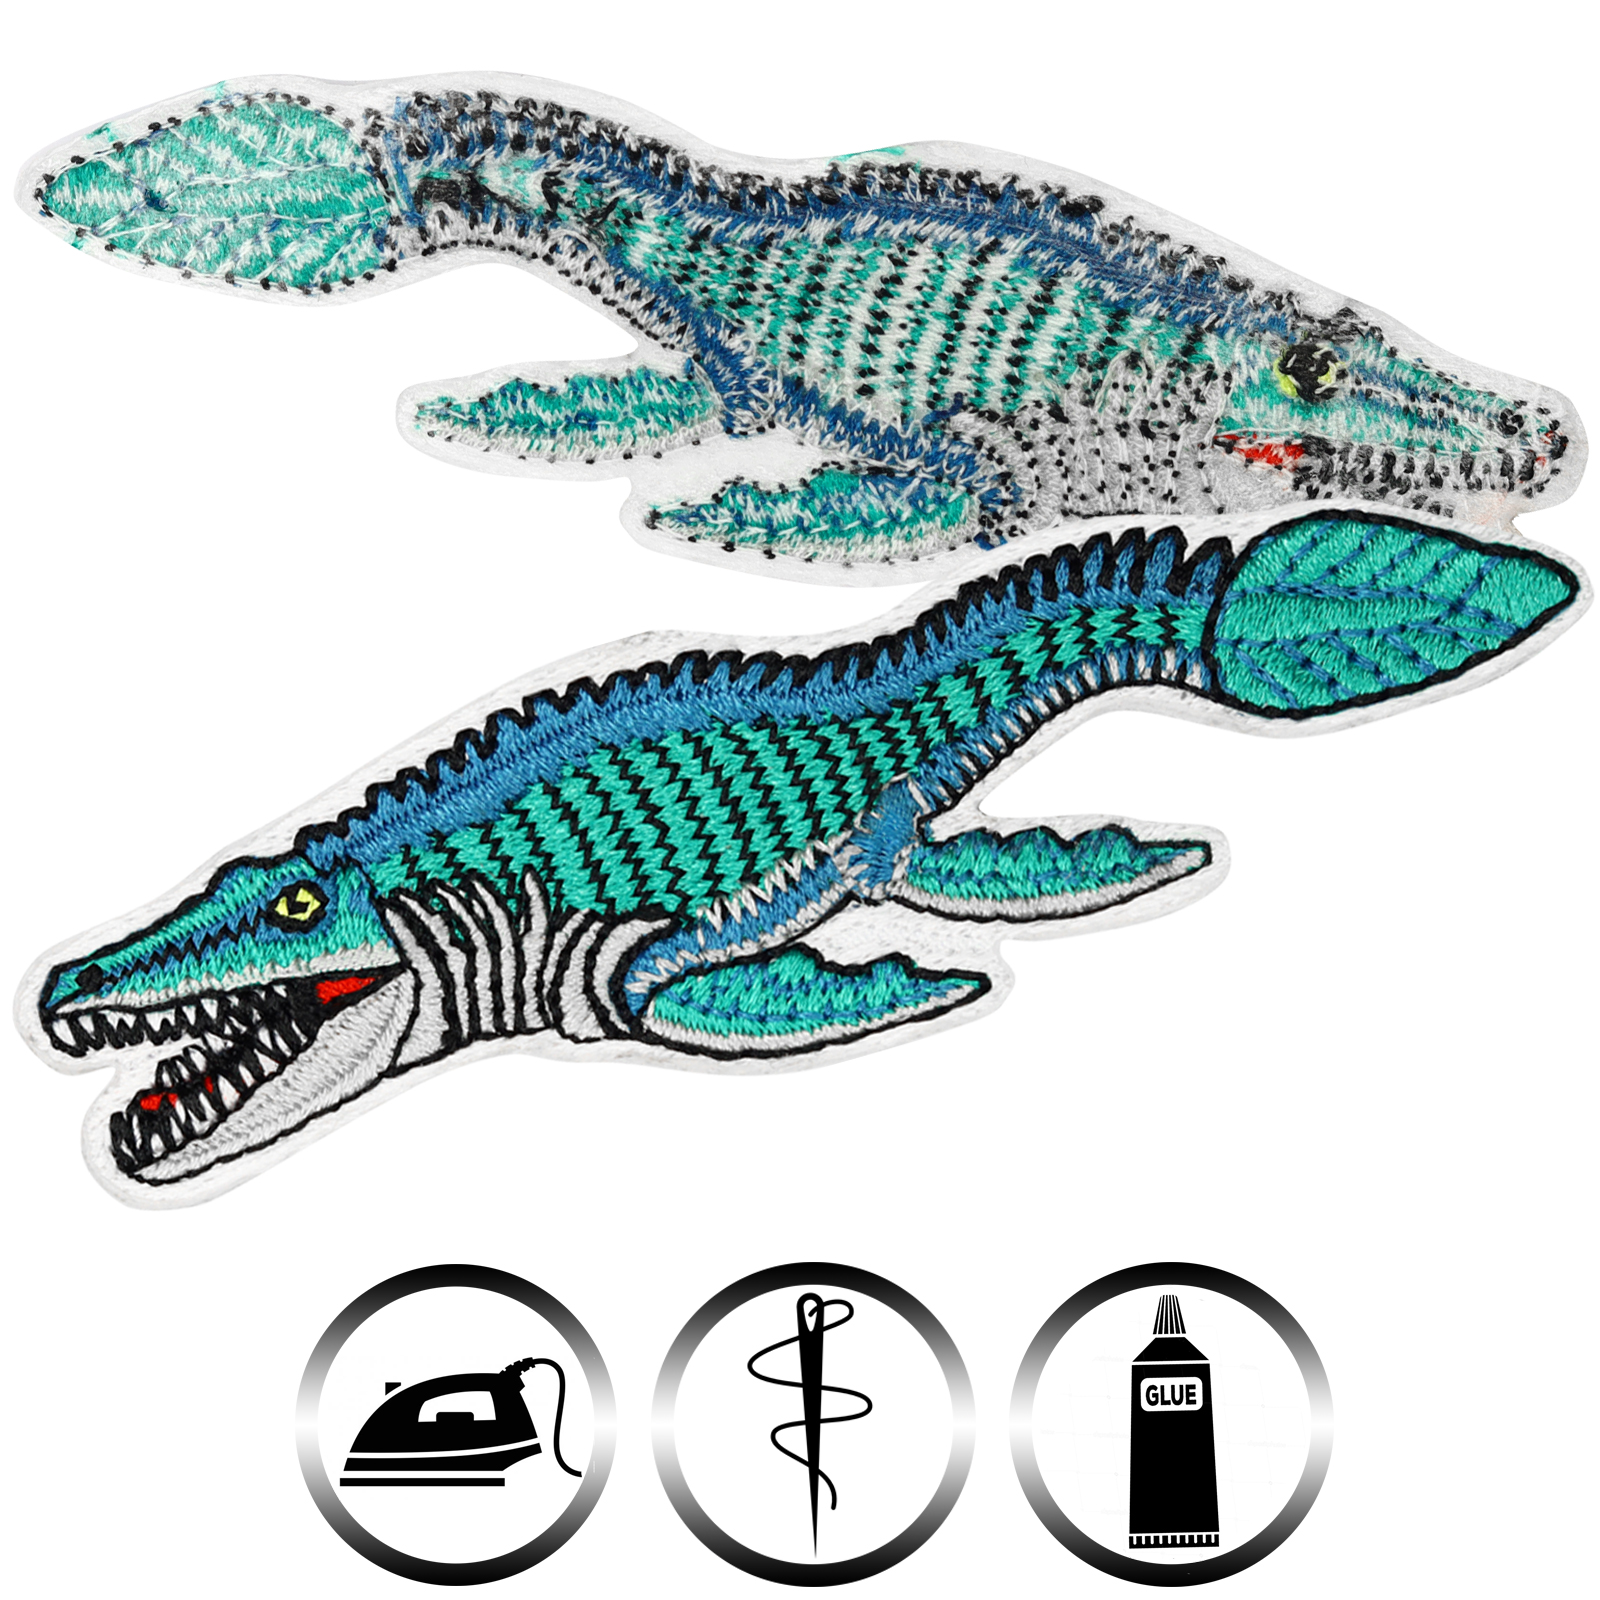 Mosasaurus Crocodile 2 - Patch